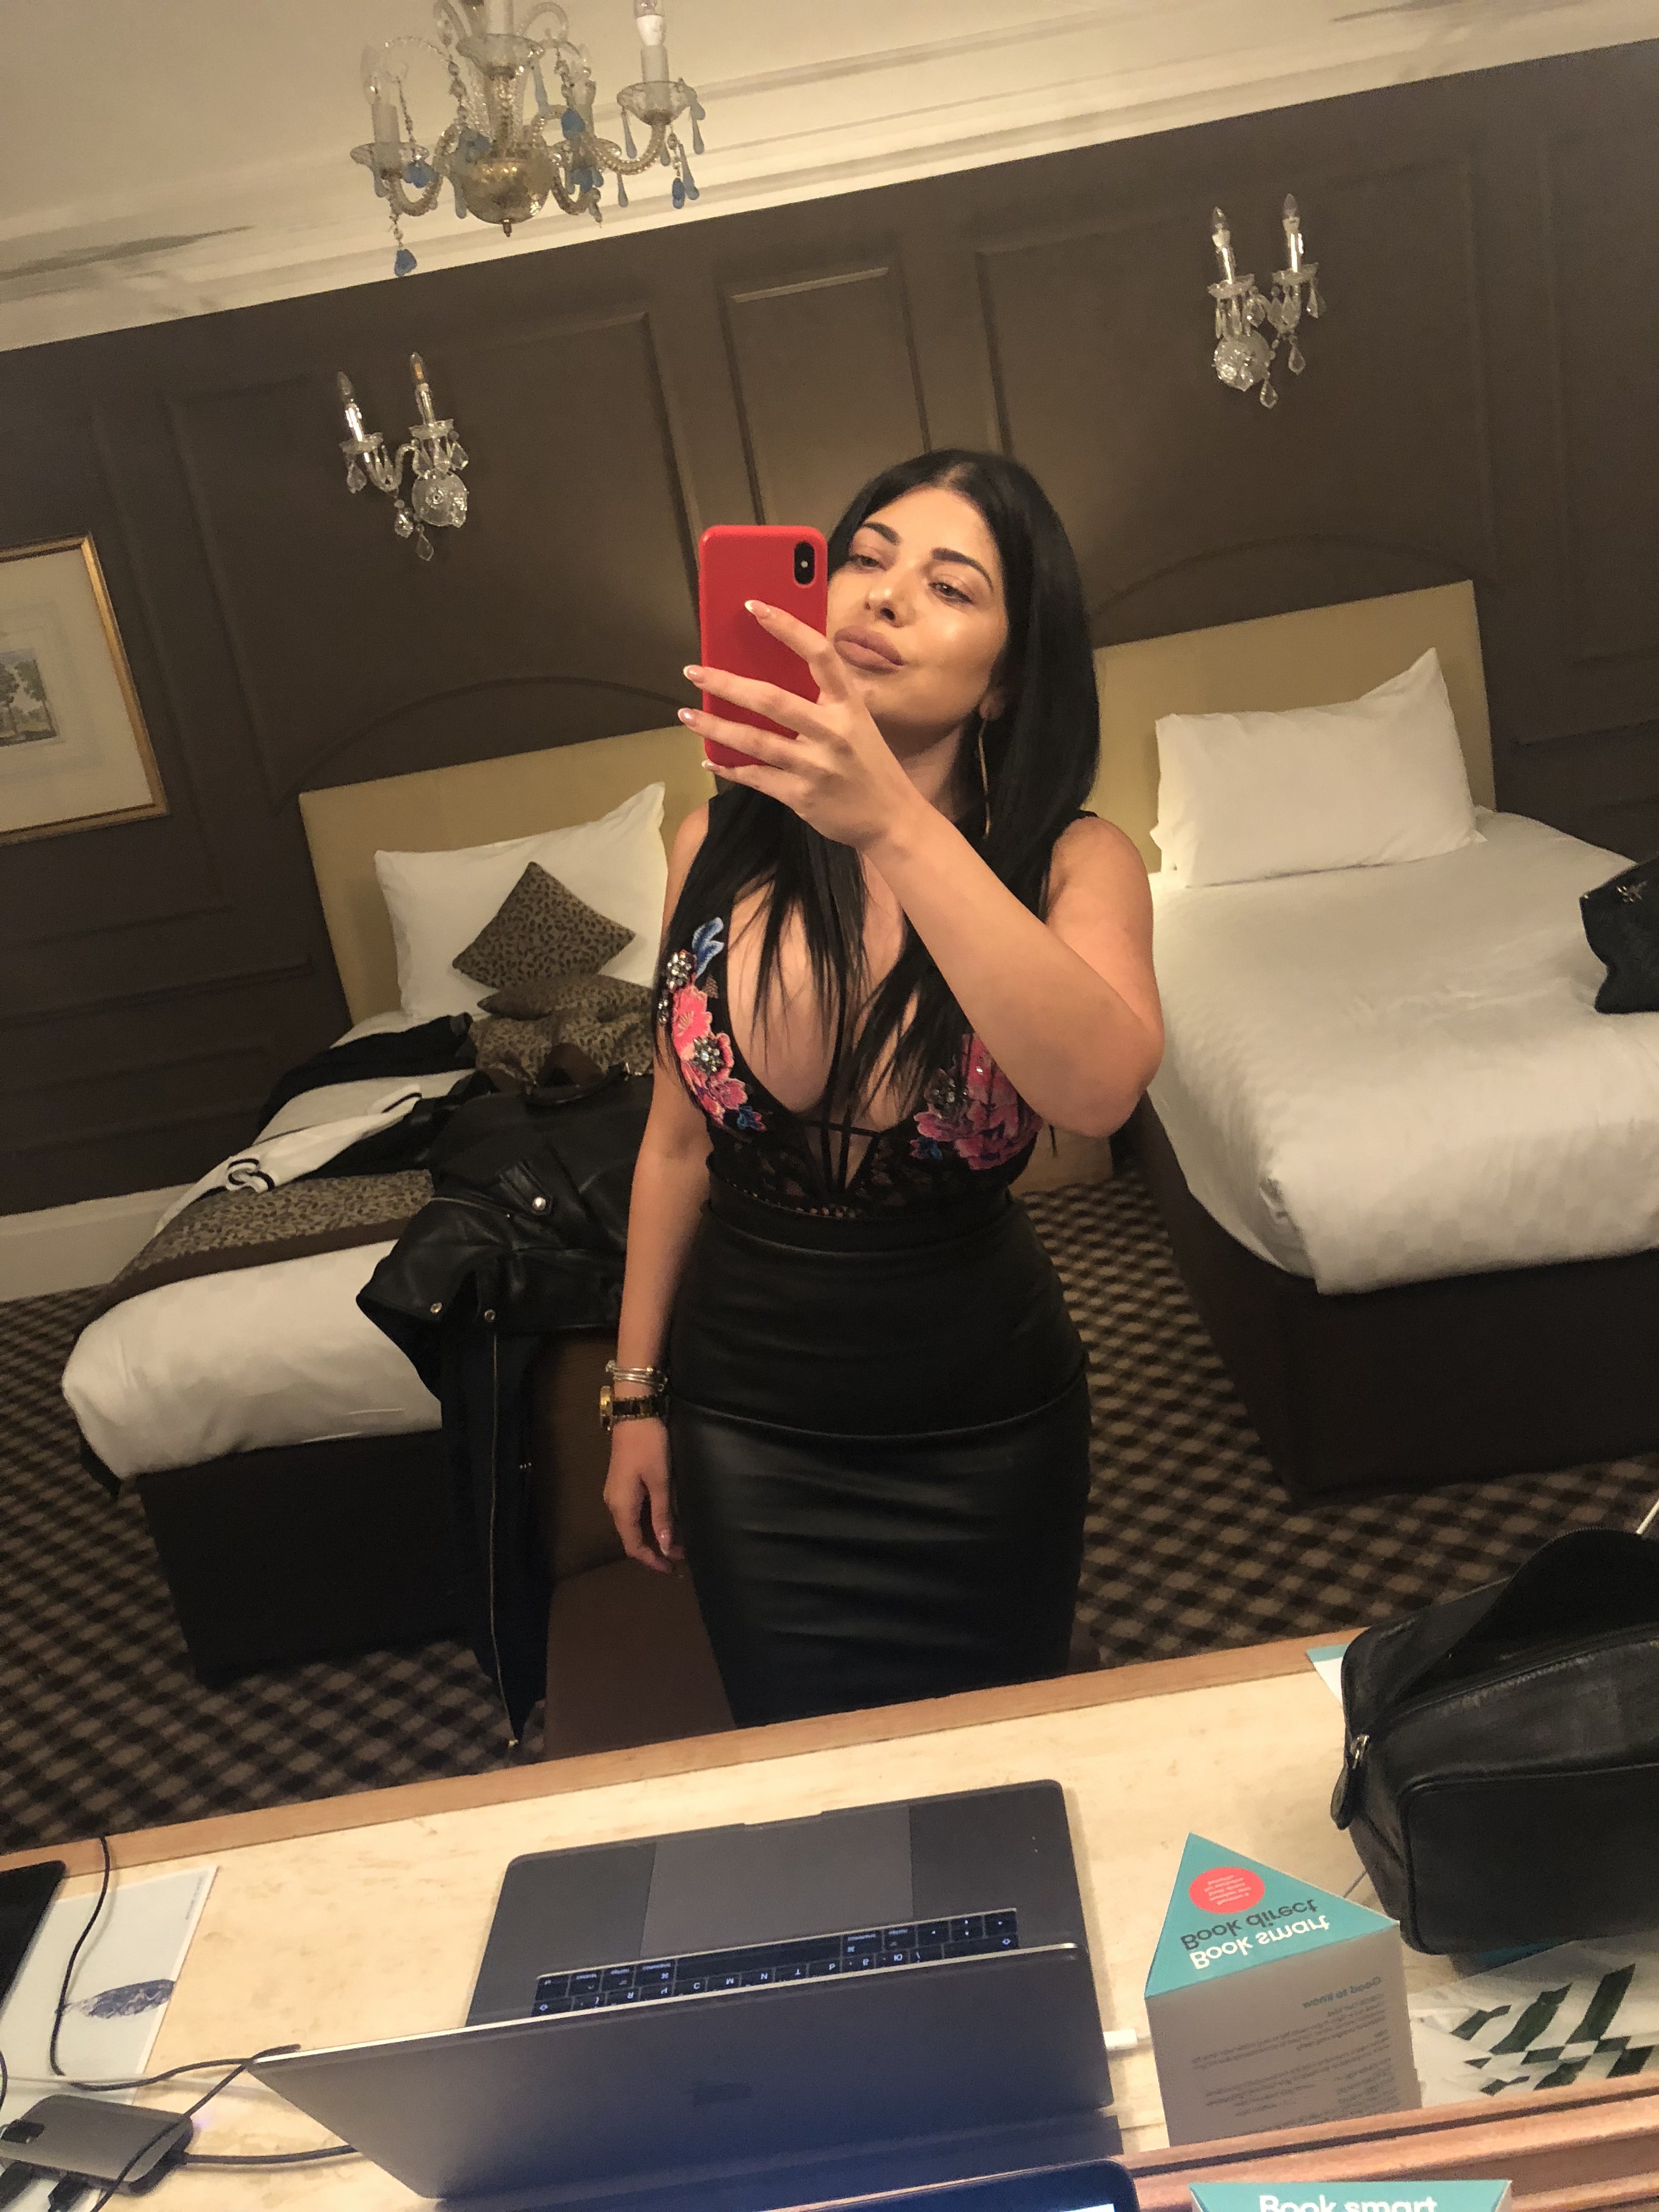 Hot selfie of Monica in a tight black dress